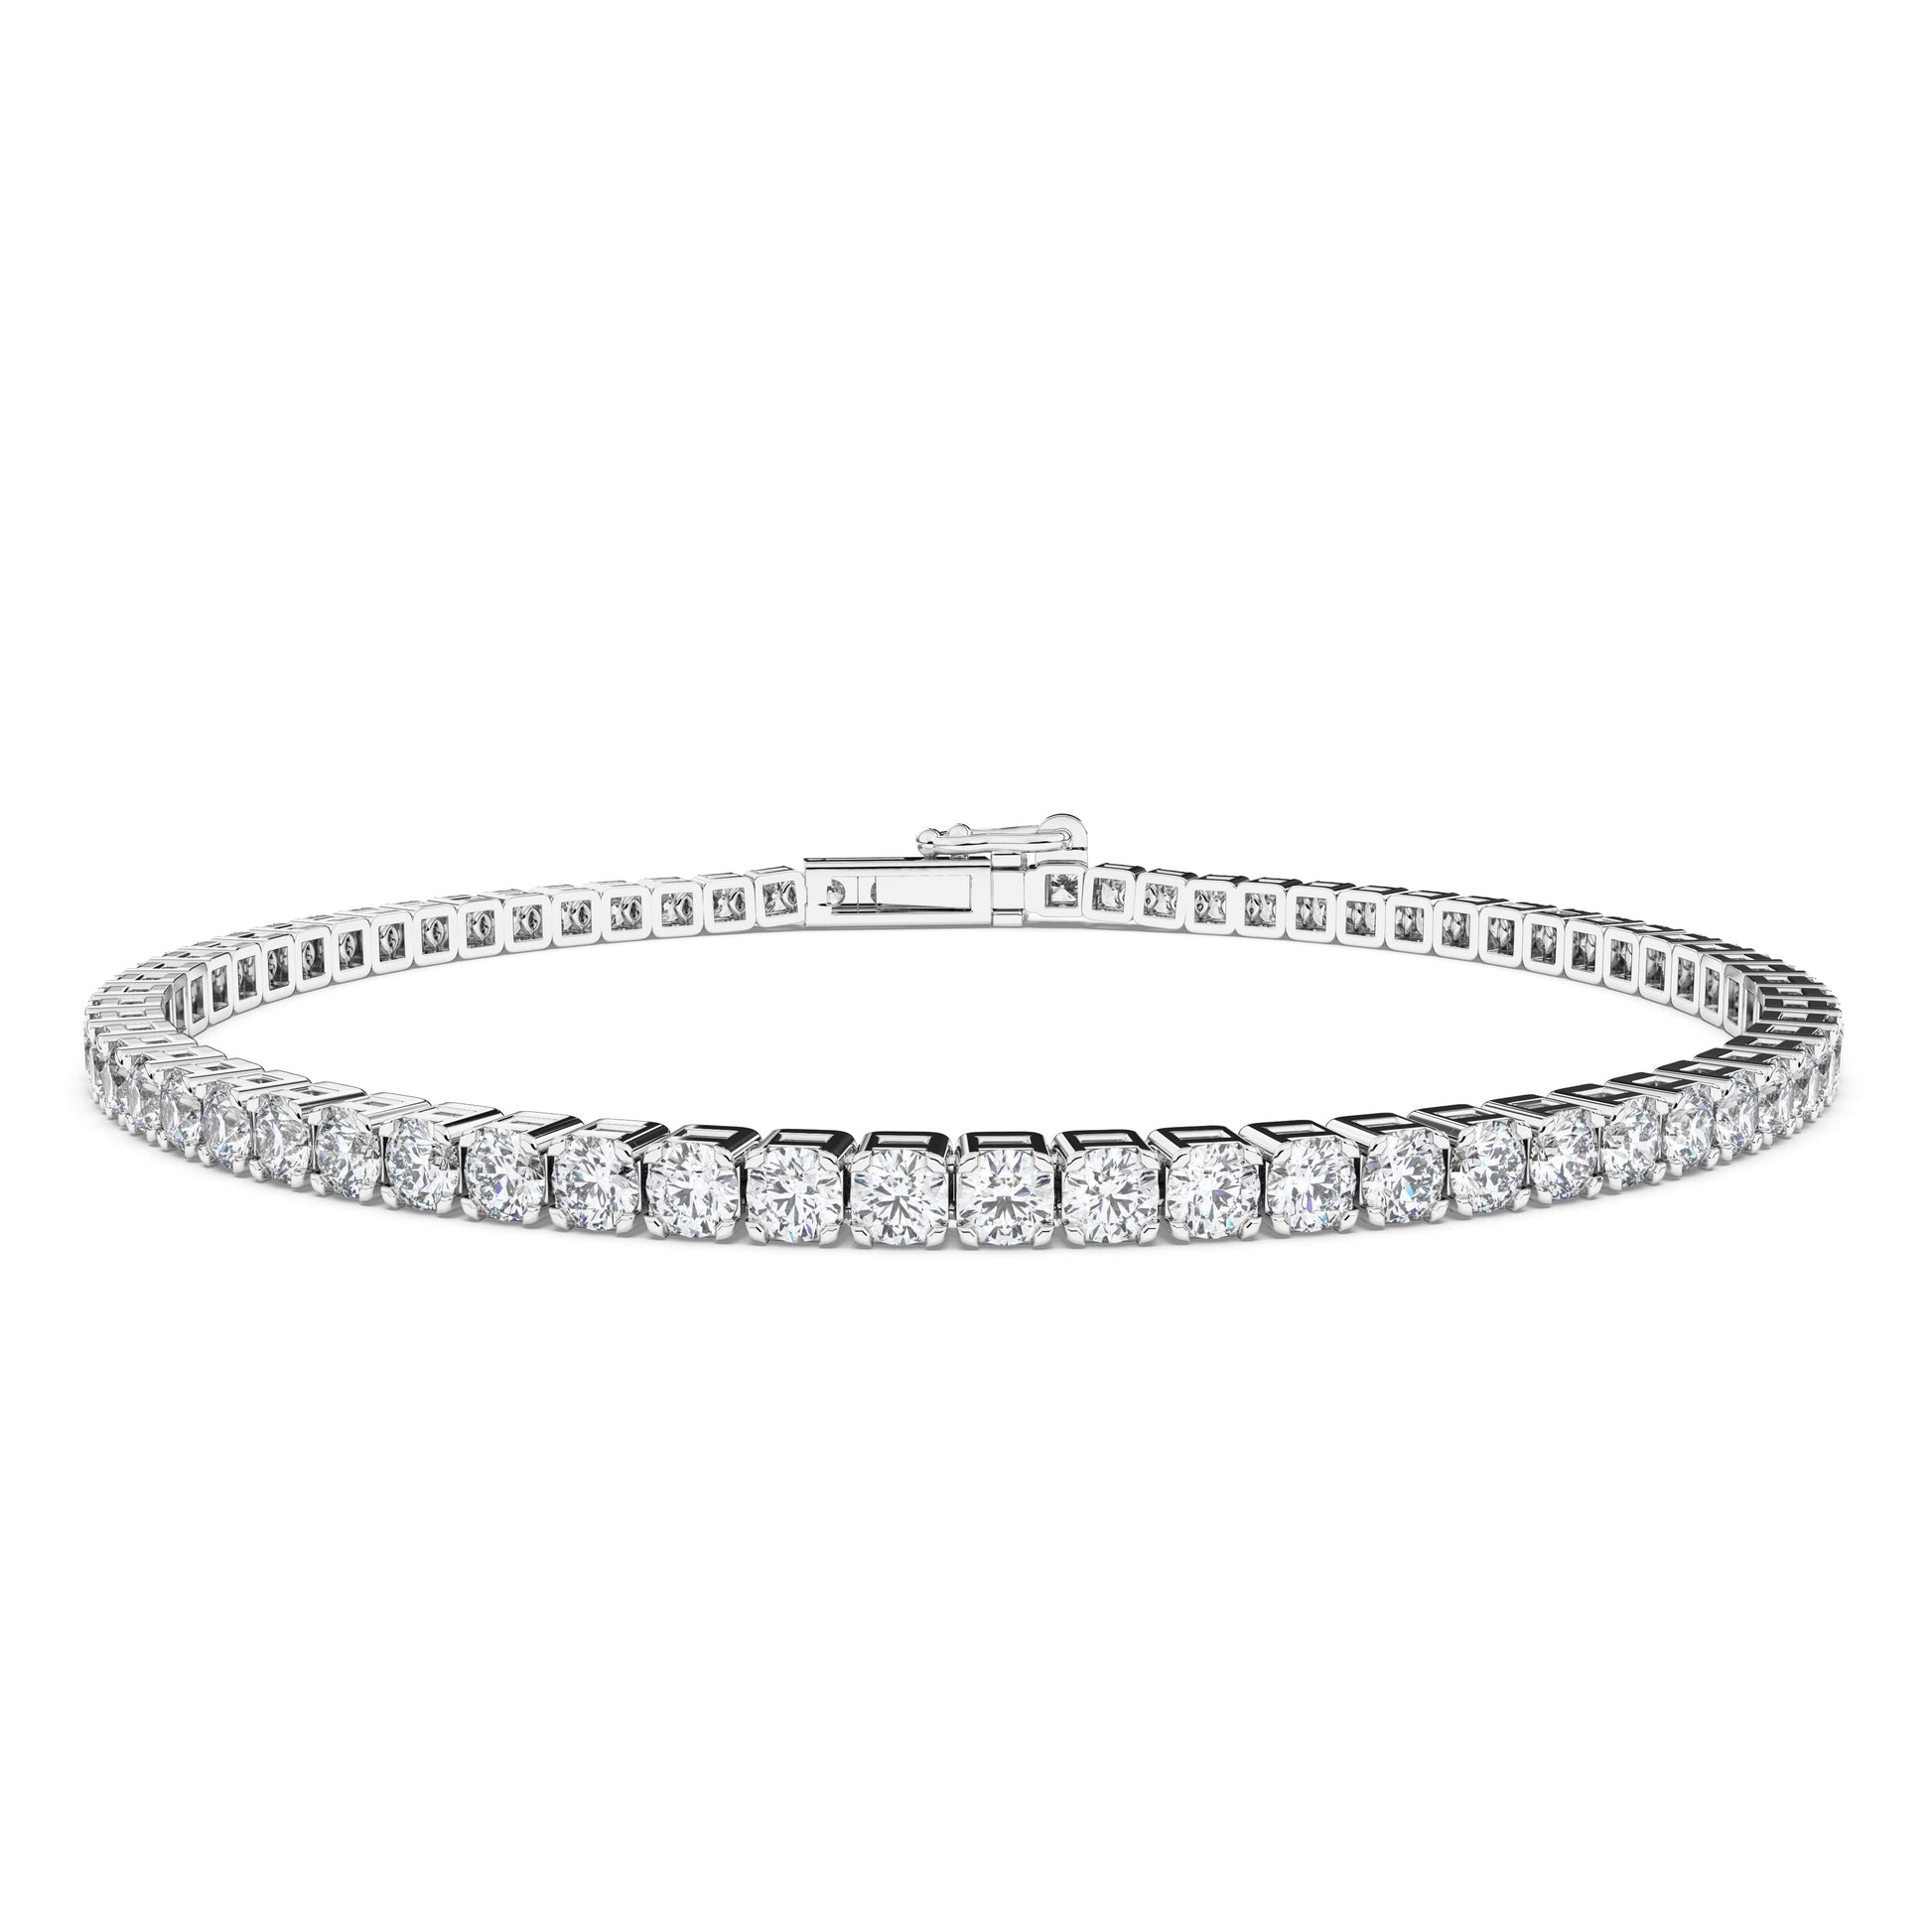 2.5 mm Round diamond tennis bracelet